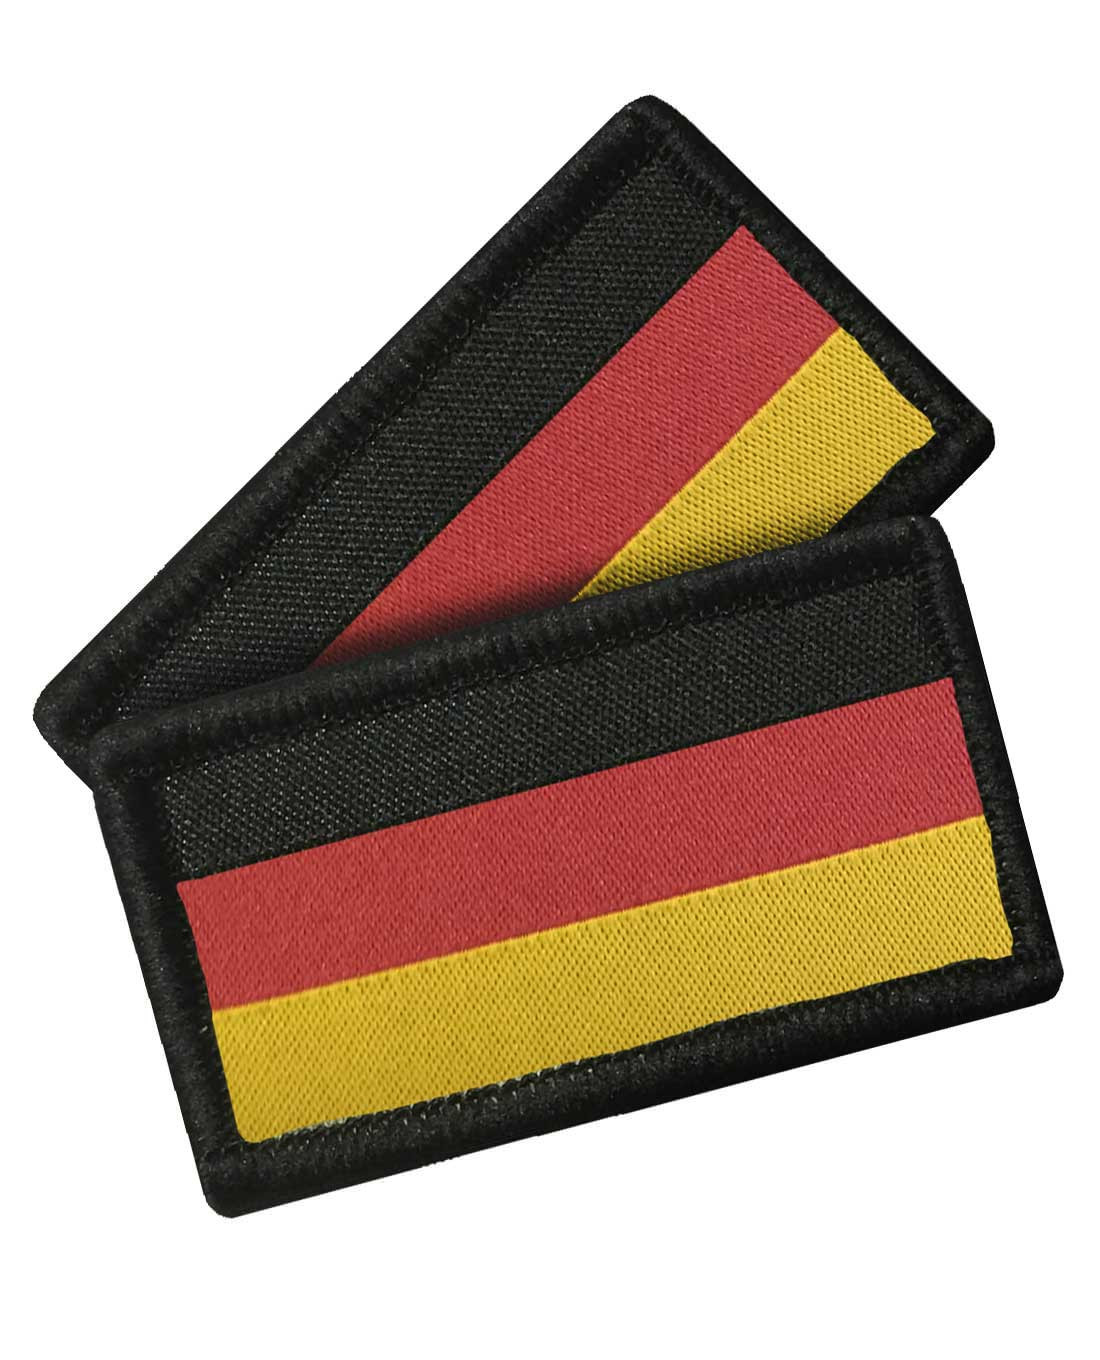 https://www.tacwrk.com/img/83132/tacwrk-deutschlandflagge-2er-set-gewebt-de-flagge-set-gewebt-1.jpg?options=rs:fill:1100:1360/g:ce/dpr:1